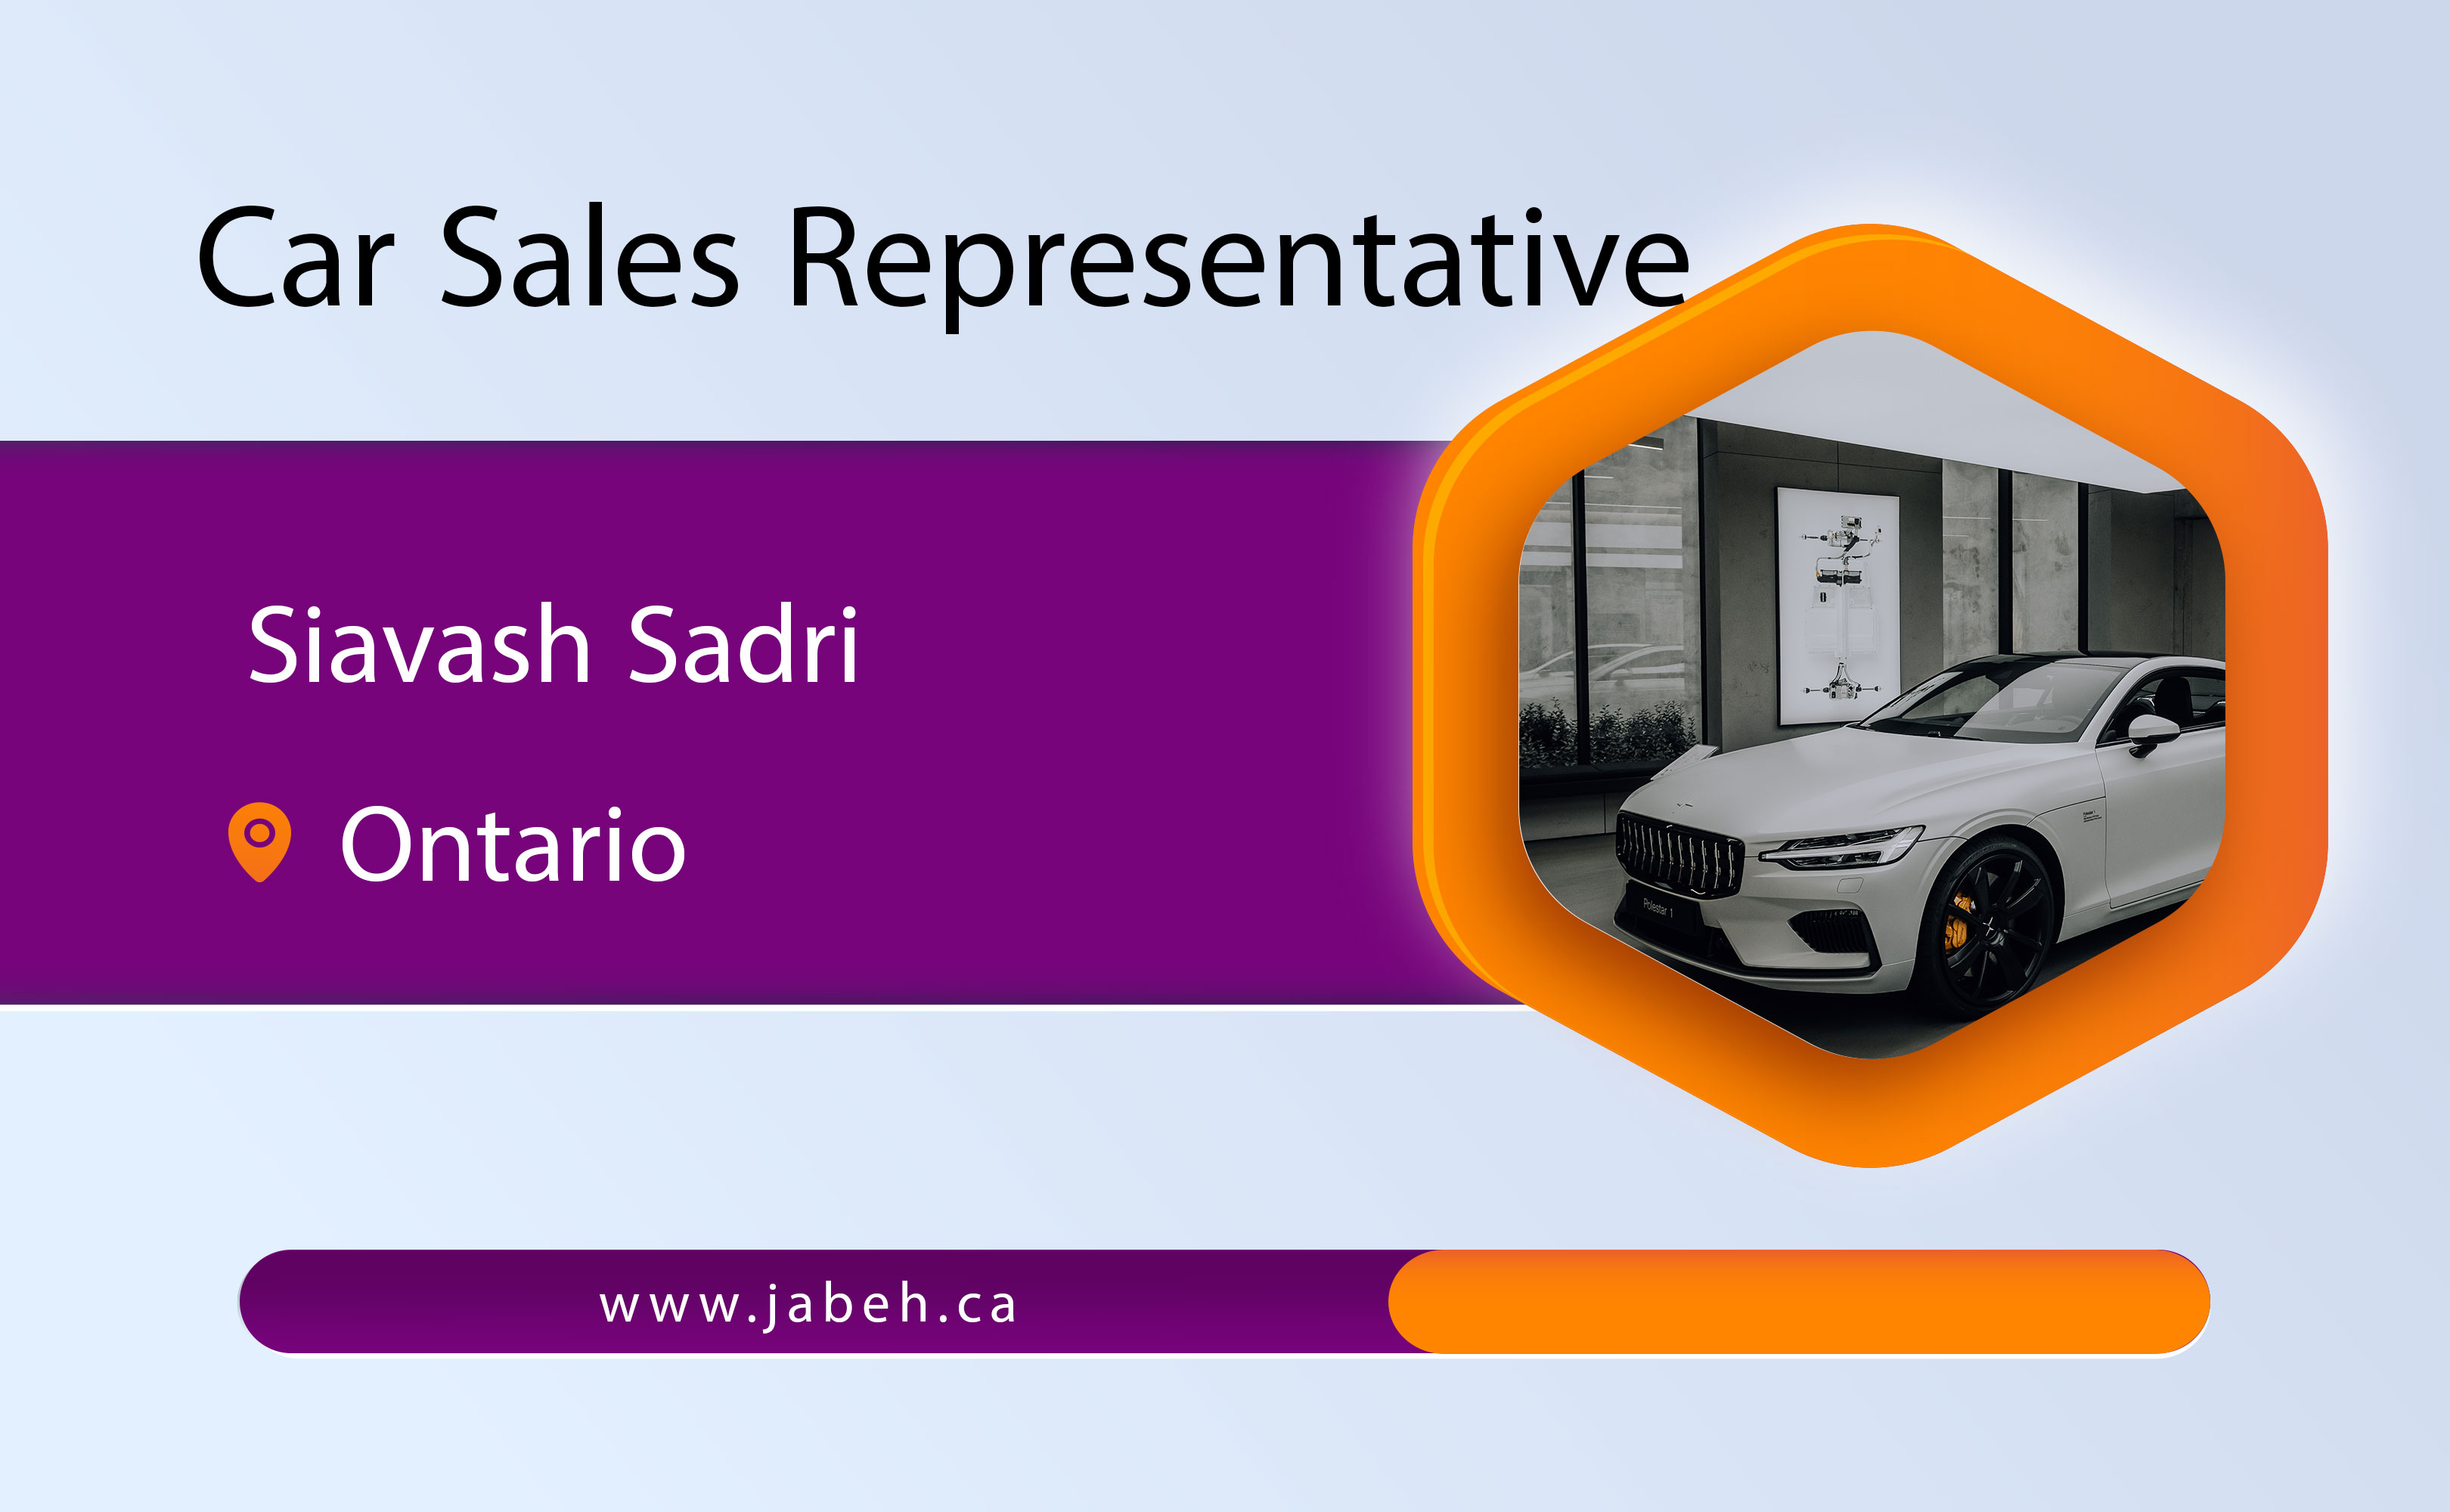 Iranian car sales representative Siavash Sadri in Ontario